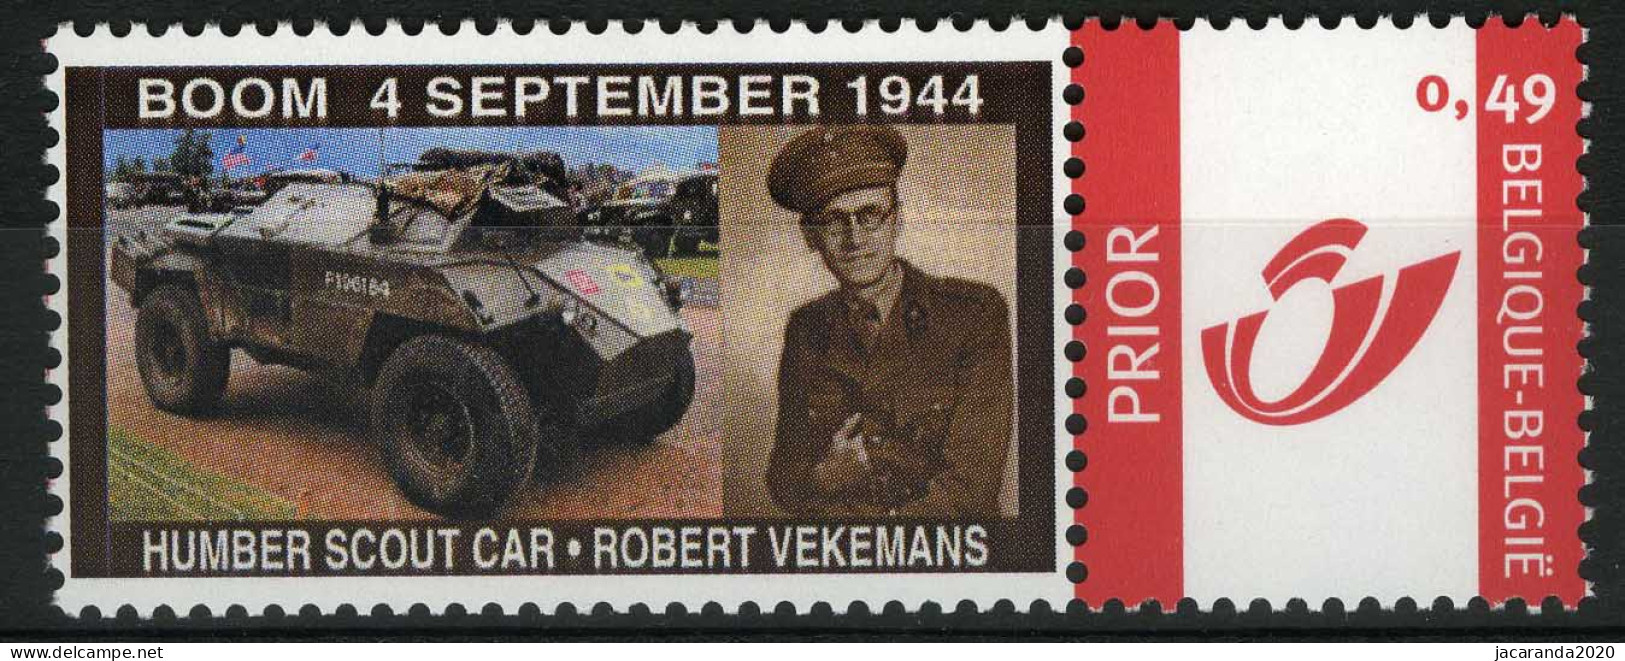 België 3183 - Duostamp - Humber Scout Car - Vekemans - Oorlog - Tank - Boom 4 September 1944 - Postfris